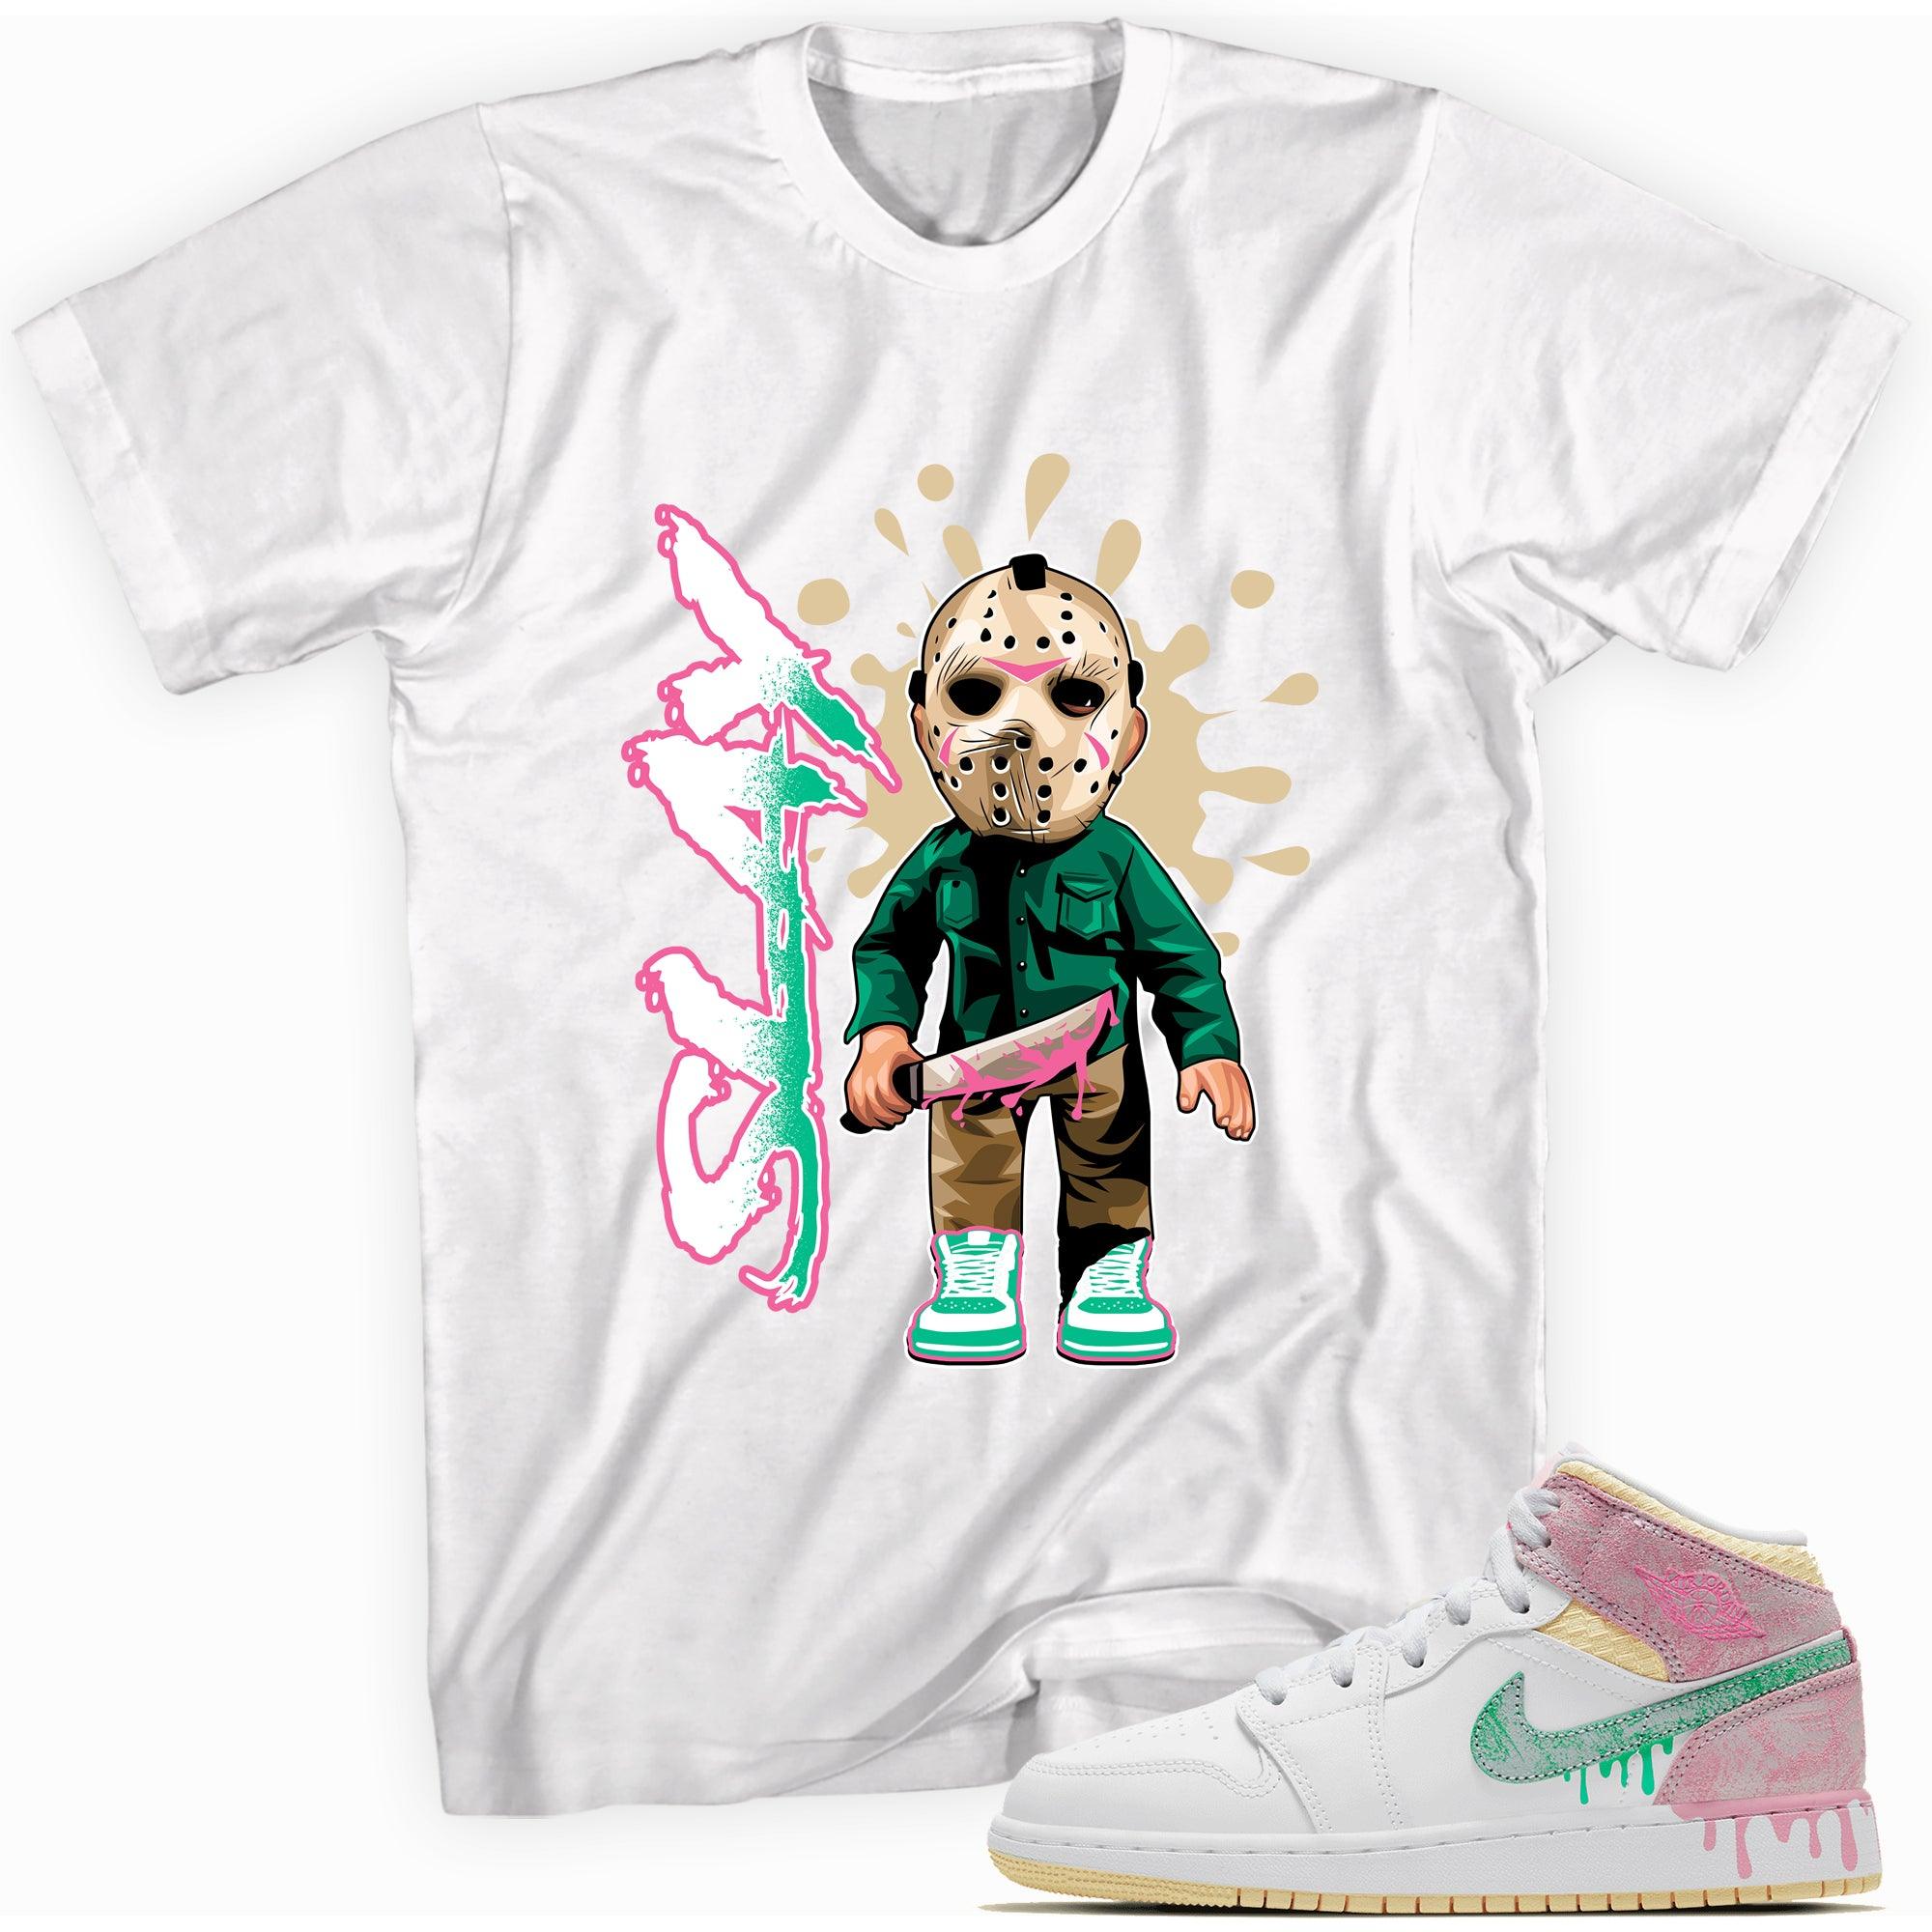 Jordan 1s Mid Ice Cream Shirt - Slay - Sneaker Shirts Outlet